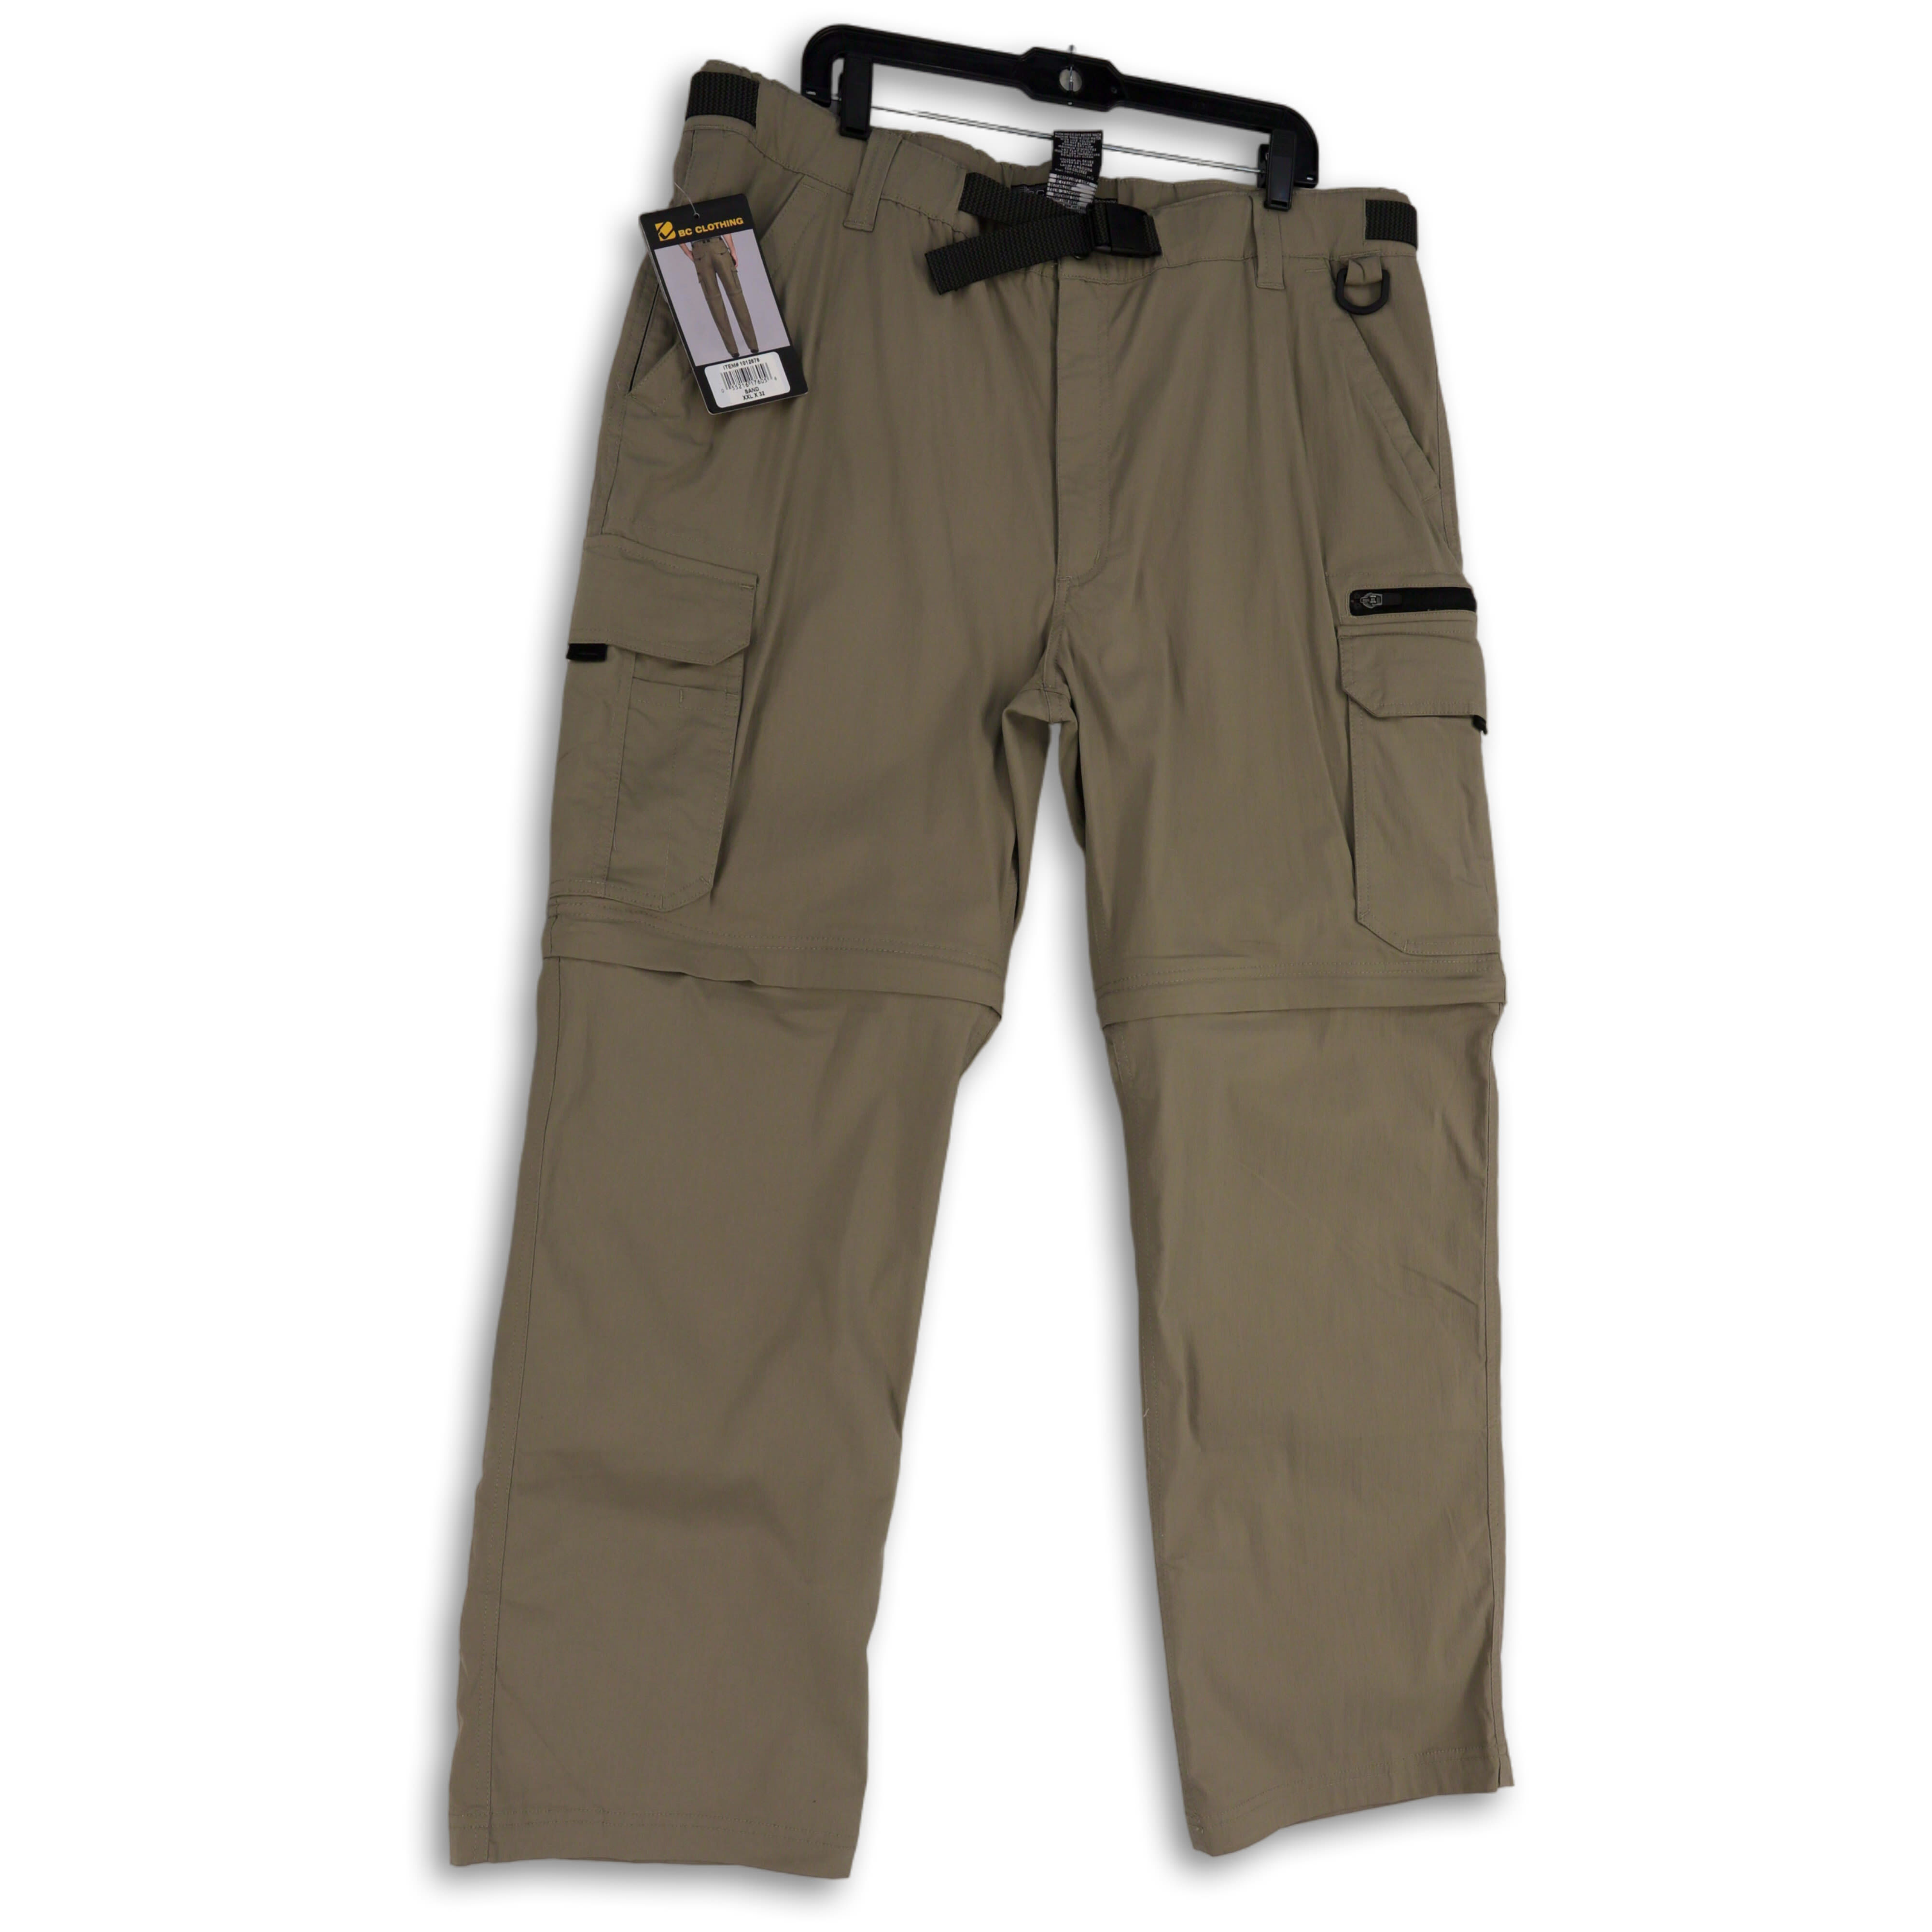 Buy Cargo Pants For Women Plus Size Xxl online | Lazada.com.ph